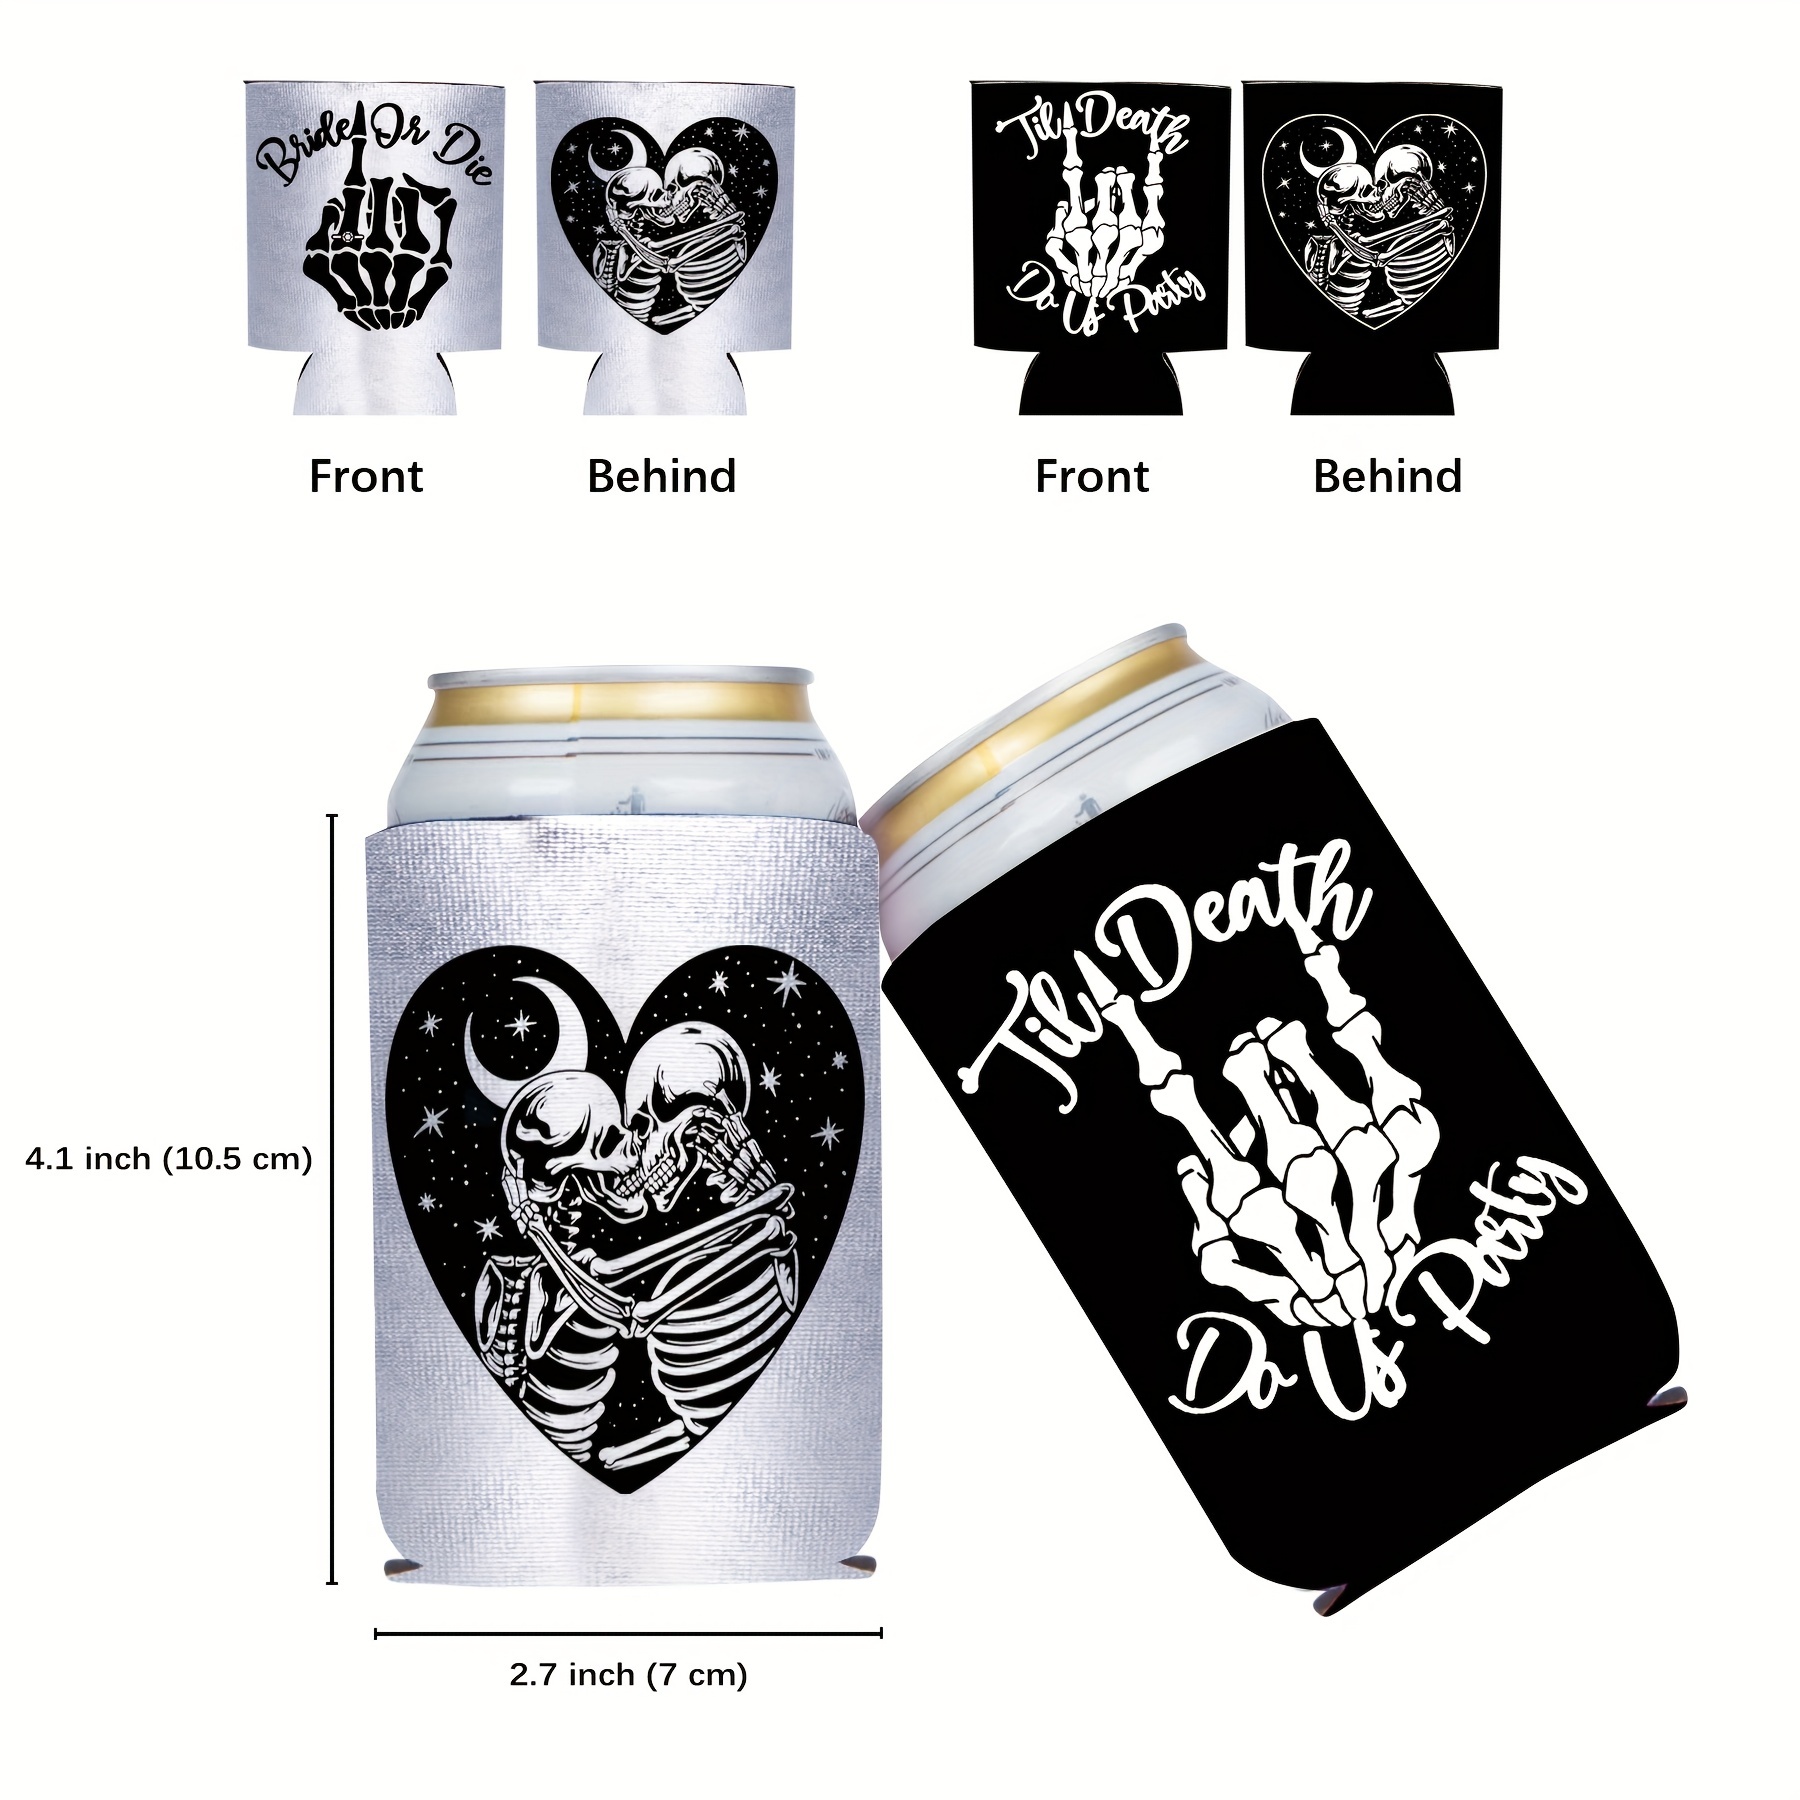 Universal Monster beer can koozie set of 4.